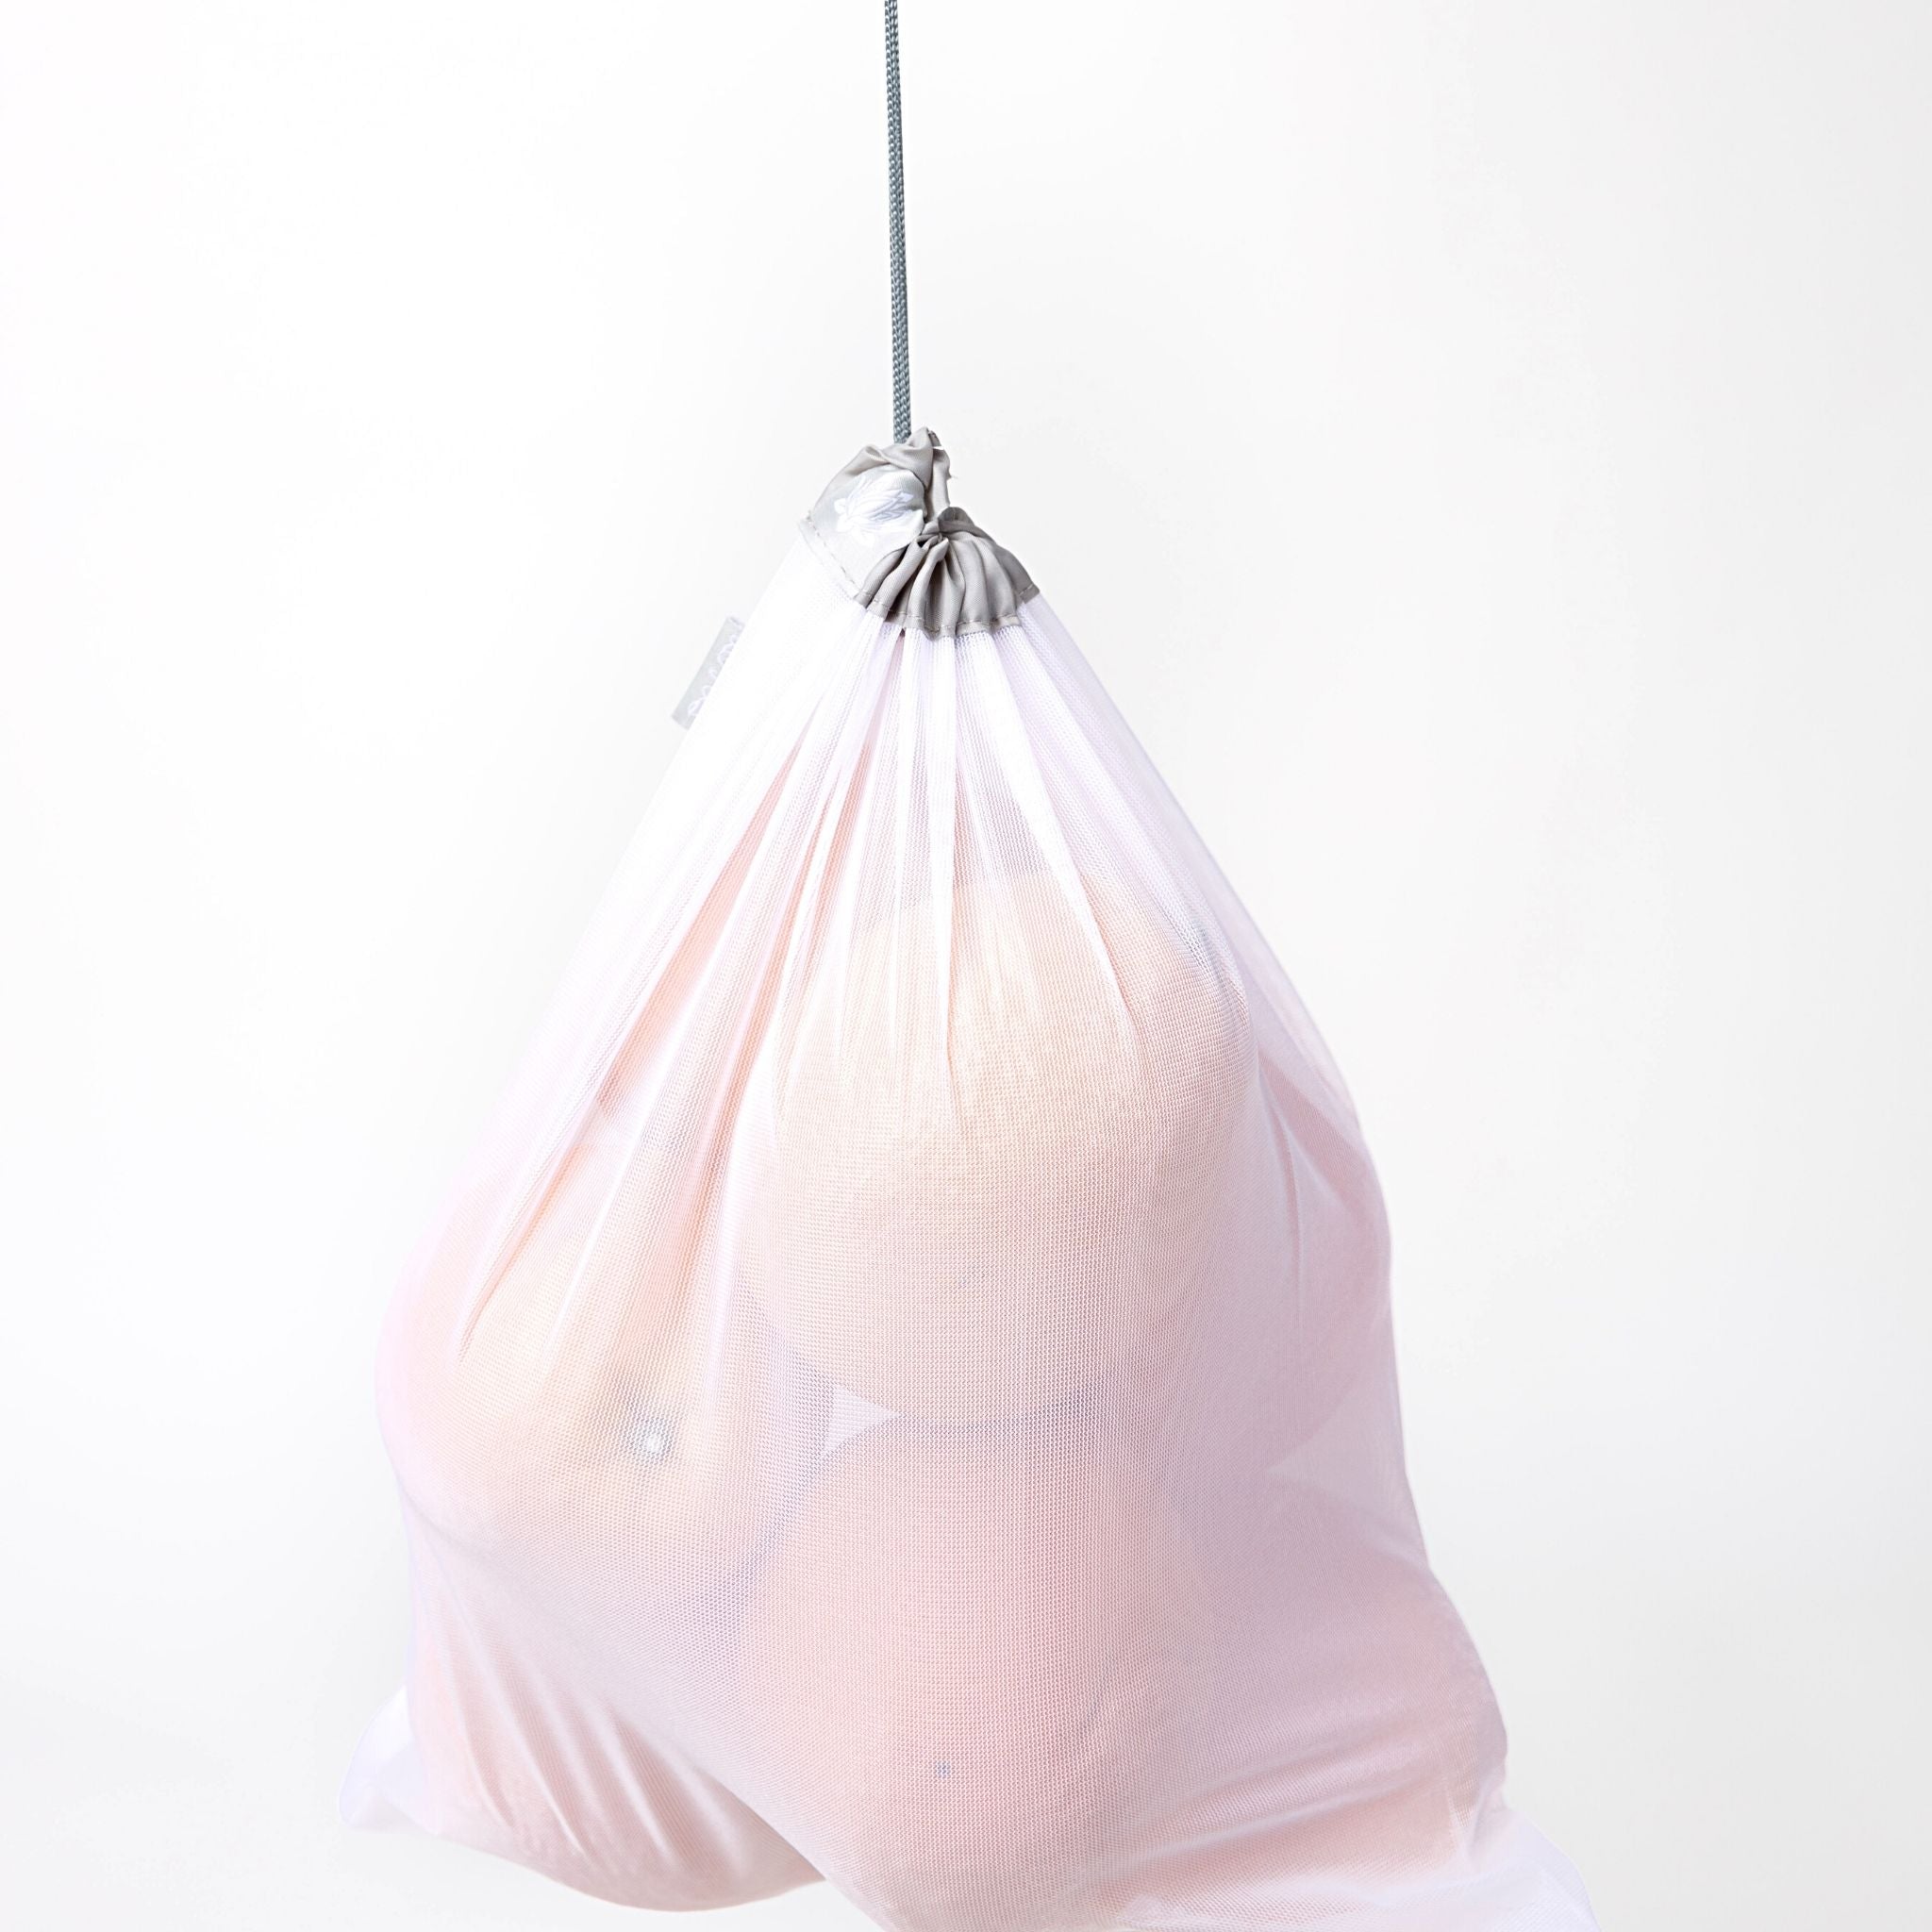 Lotus Produce Bags in Mesh - Set of 9 - LOTUS TROLLEY BAG